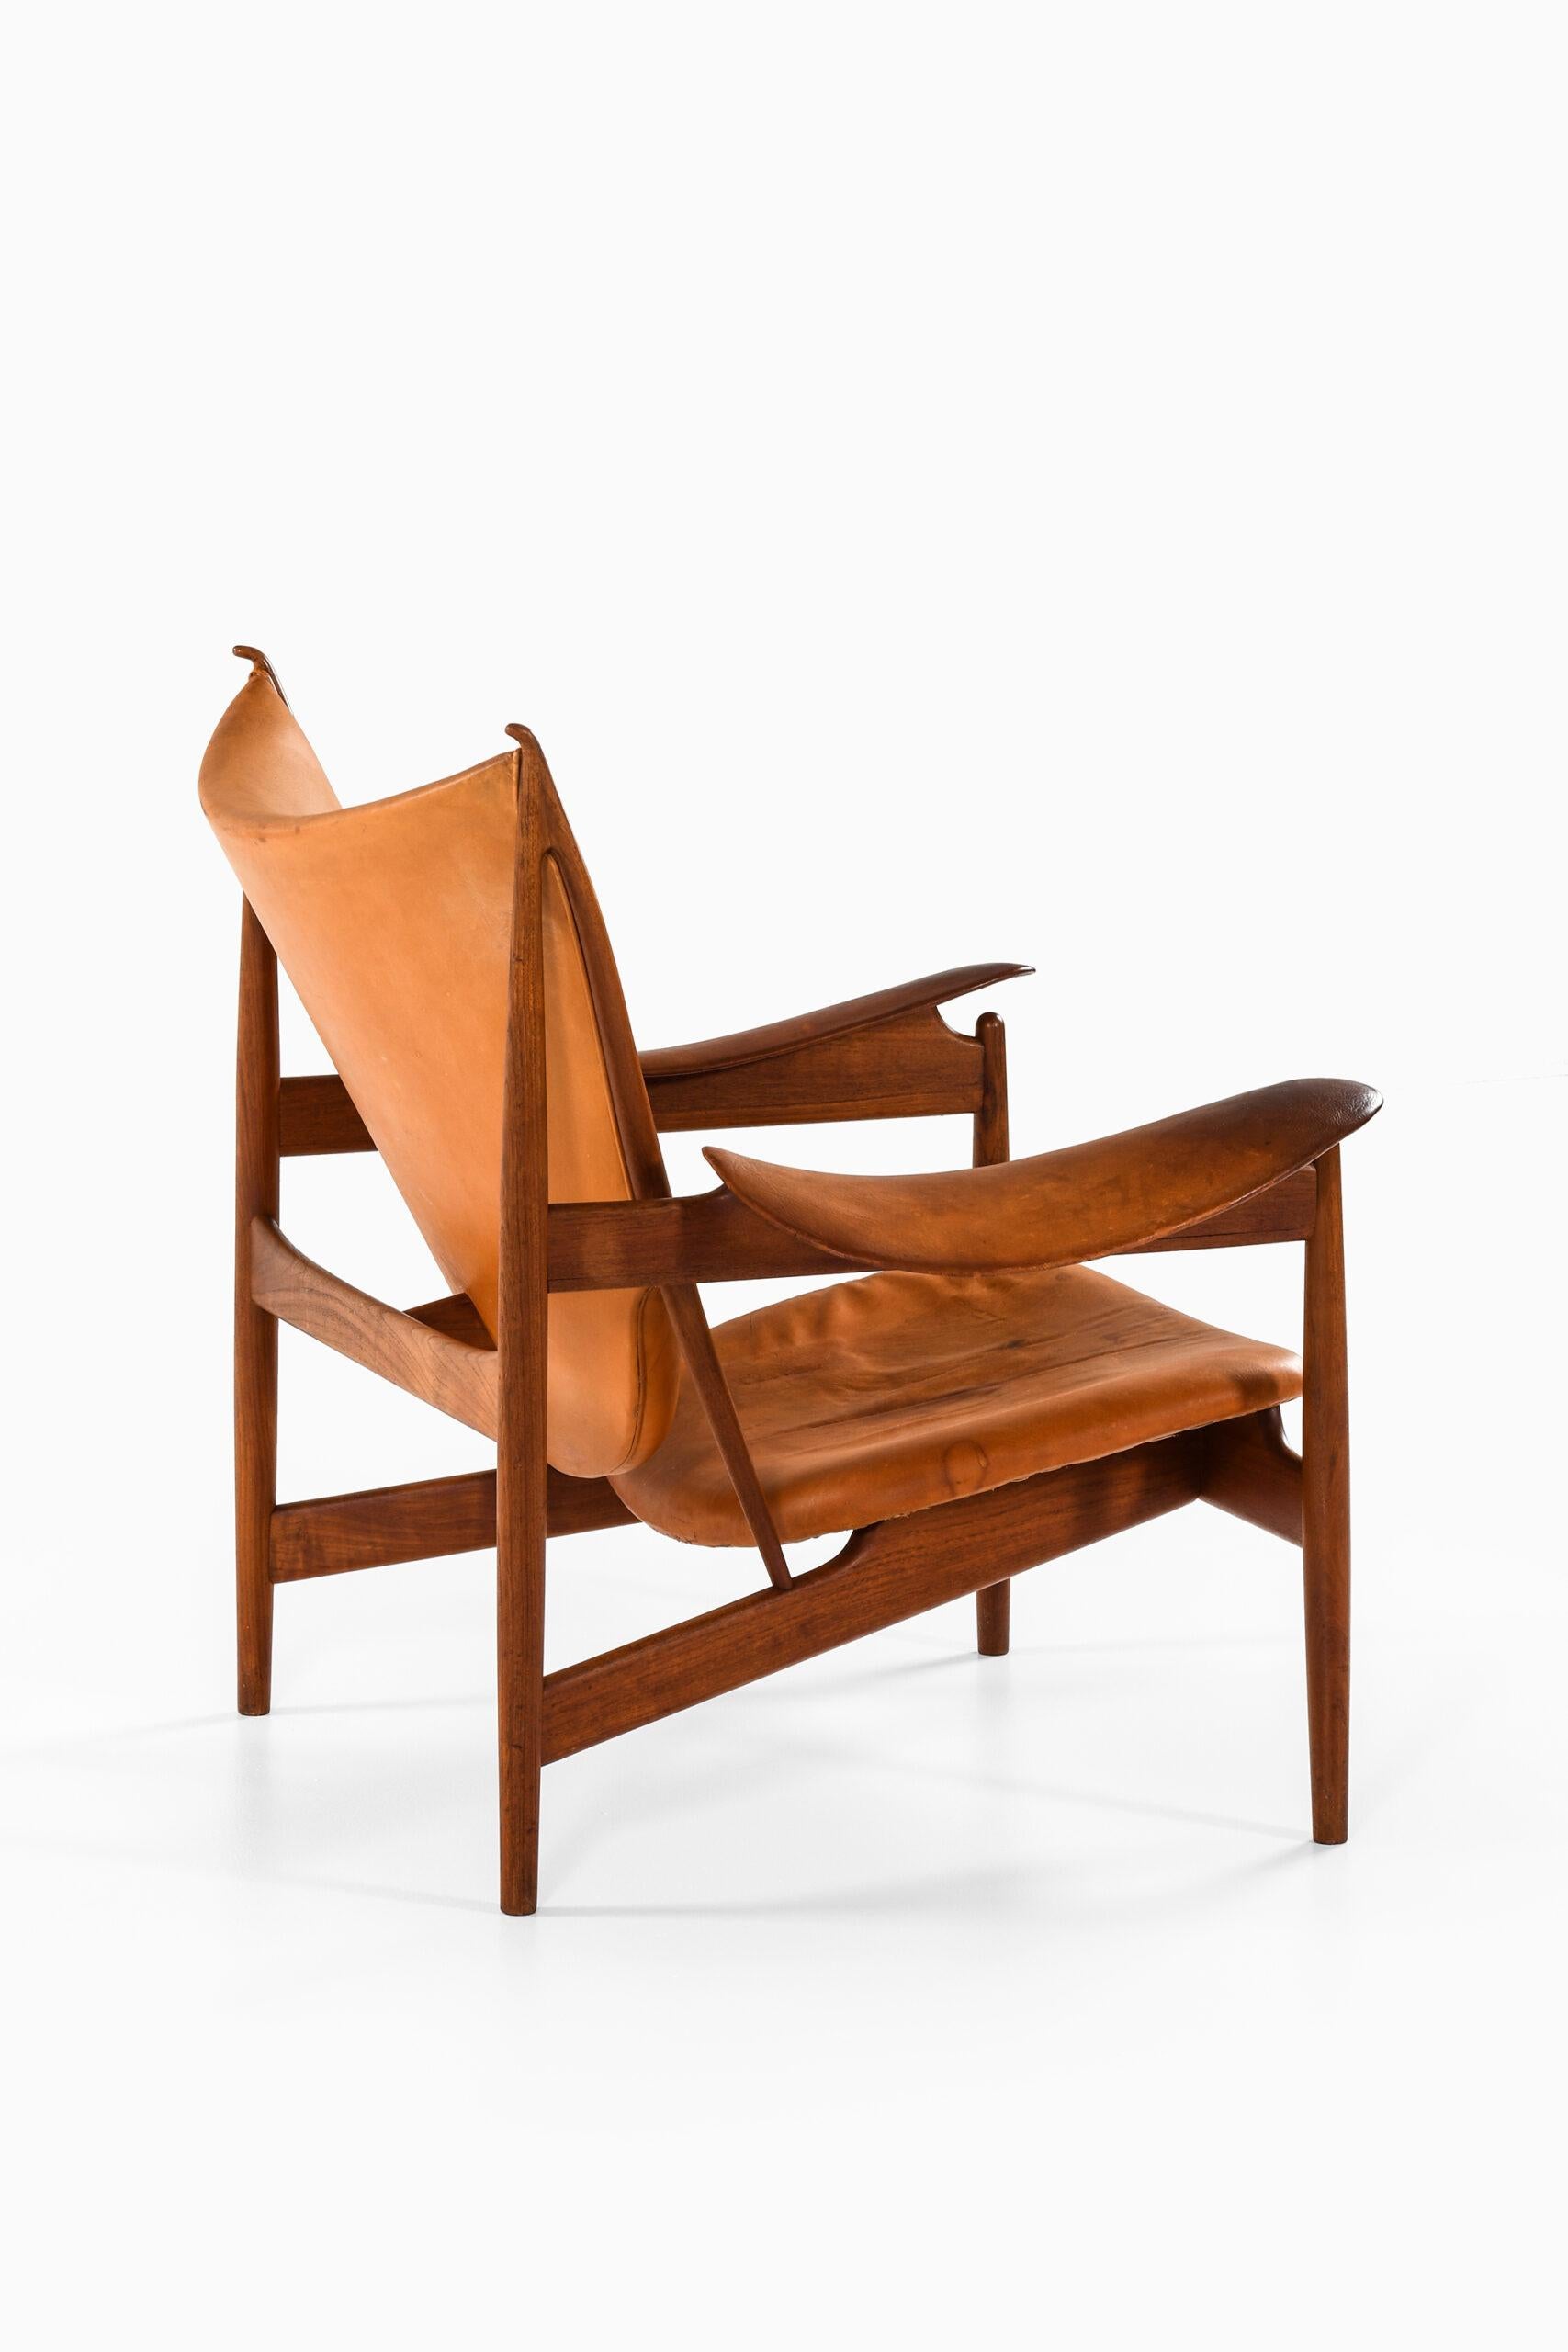 Finn Juhl Chieftain Easy Chair Produced by Cabinetmaker Niels Vodder 5